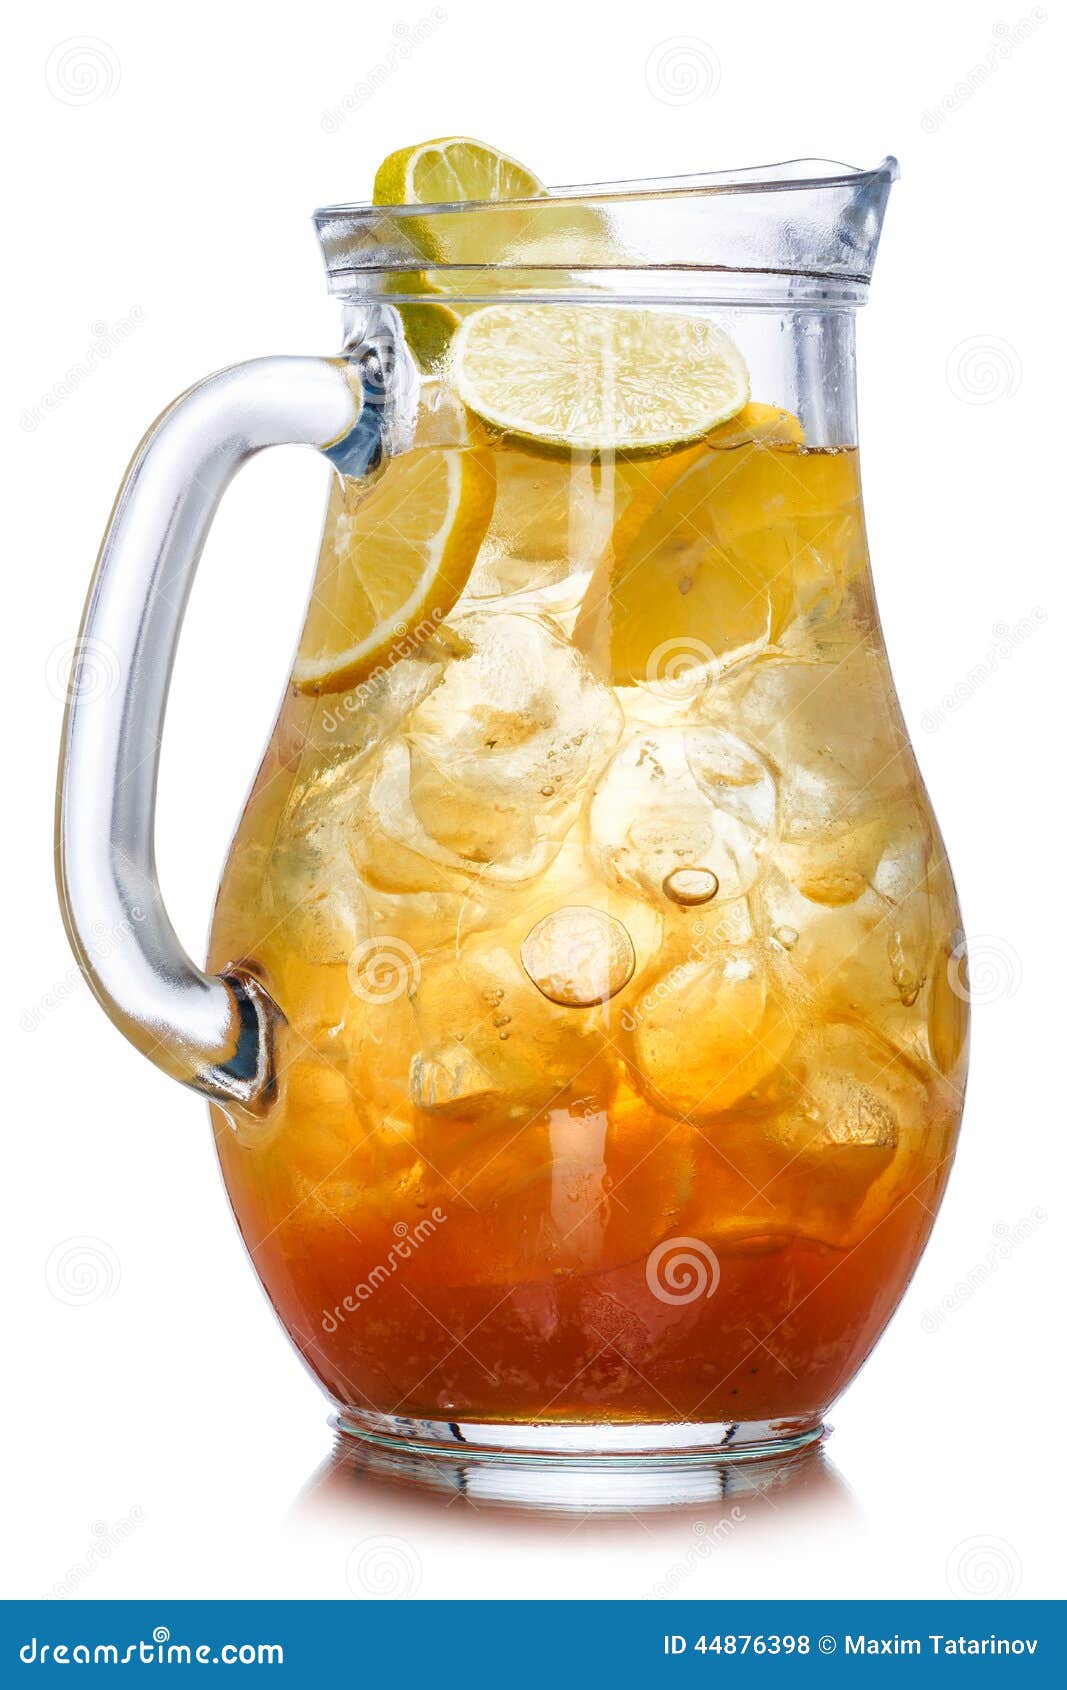 https://thumbs.dreamstime.com/z/iced-tea-pitcher-jug-cold-low-key-image-44876398.jpg